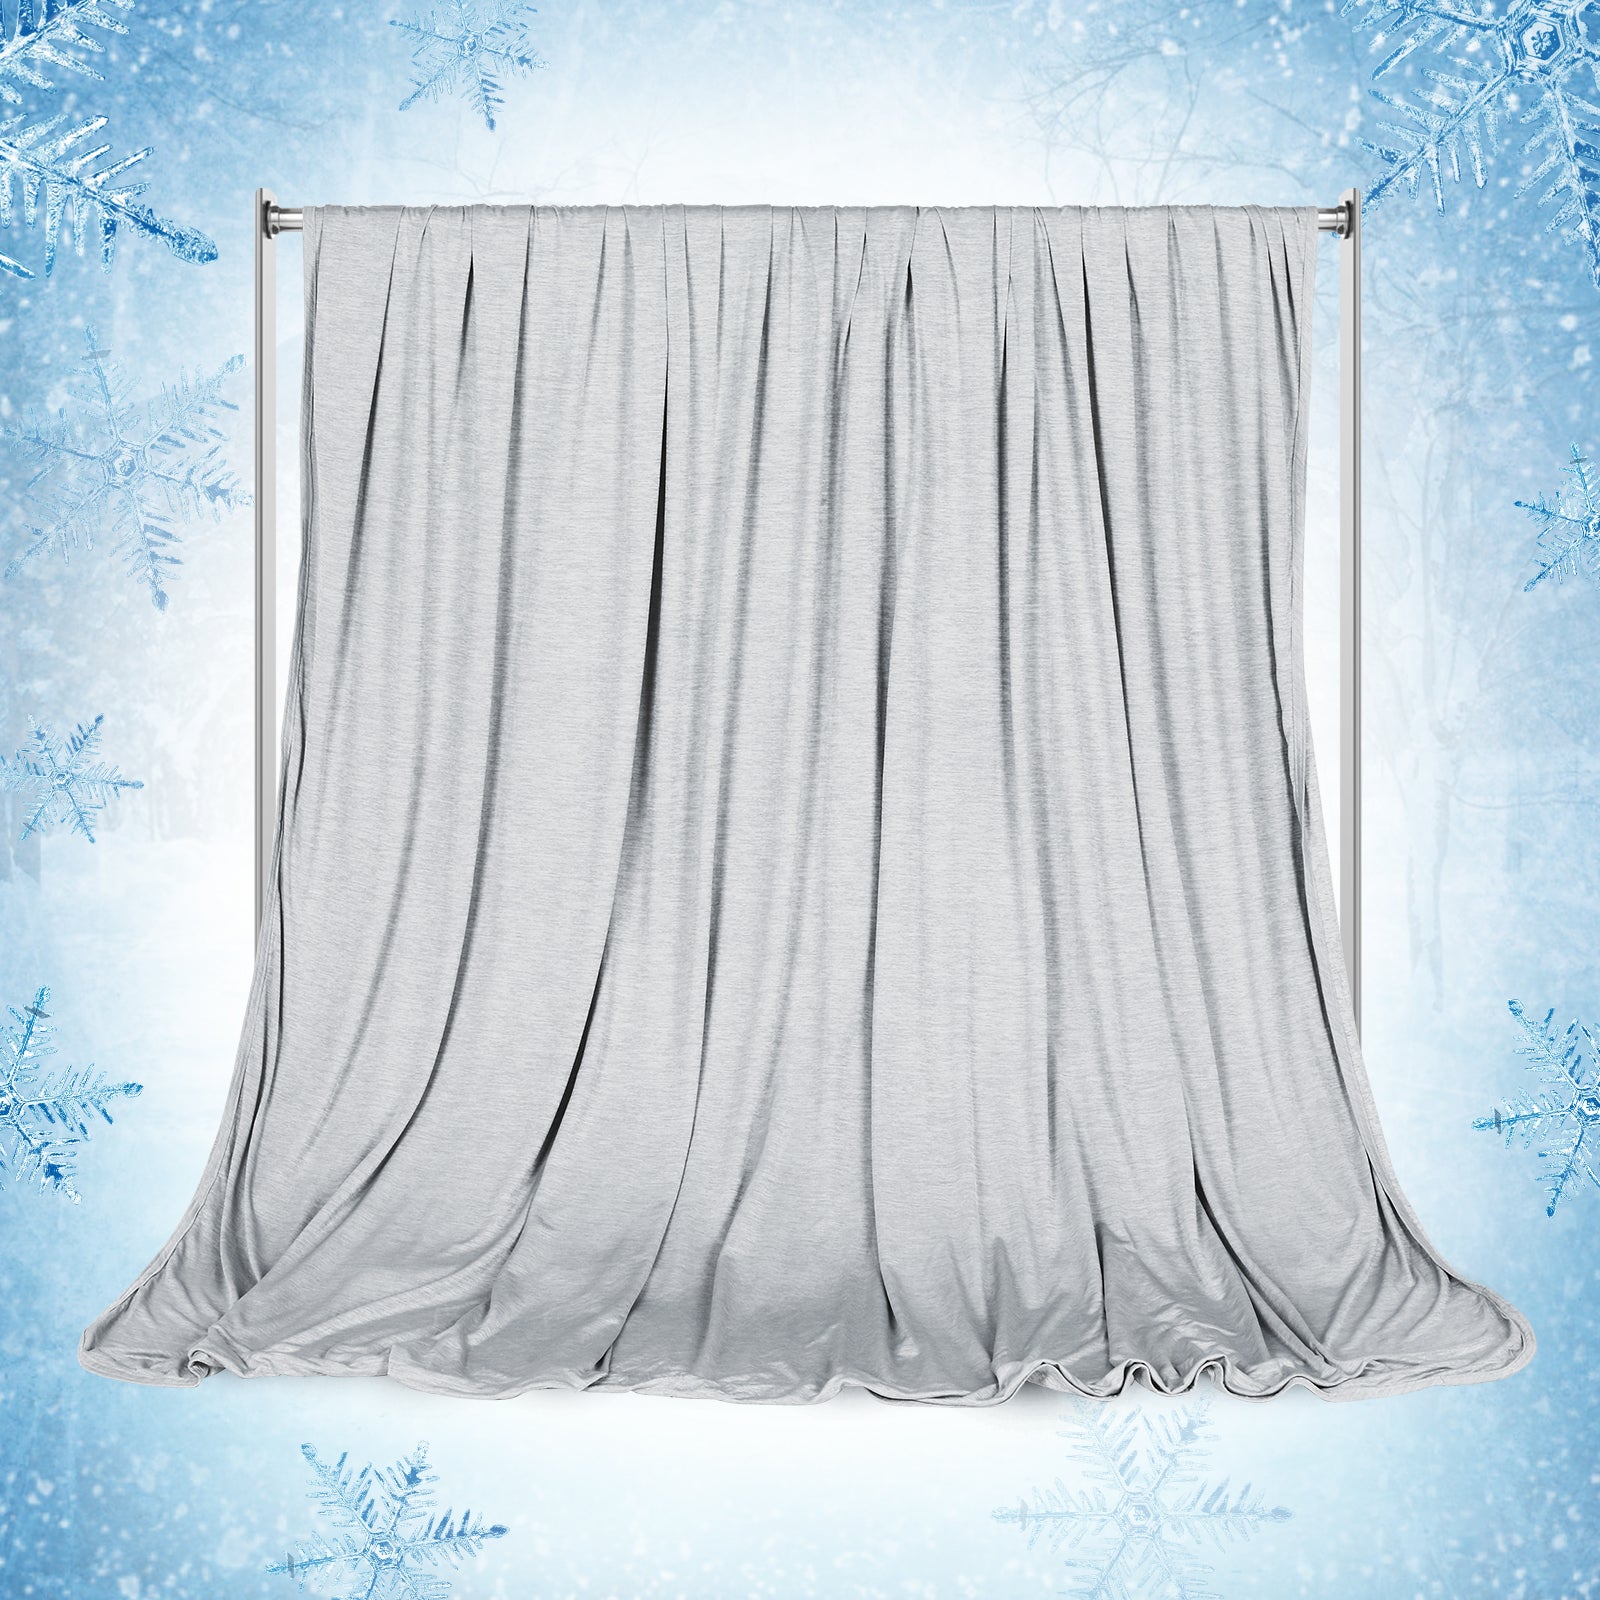 SOLEDI Cooling Blanket Cozy Blanket (Grey)